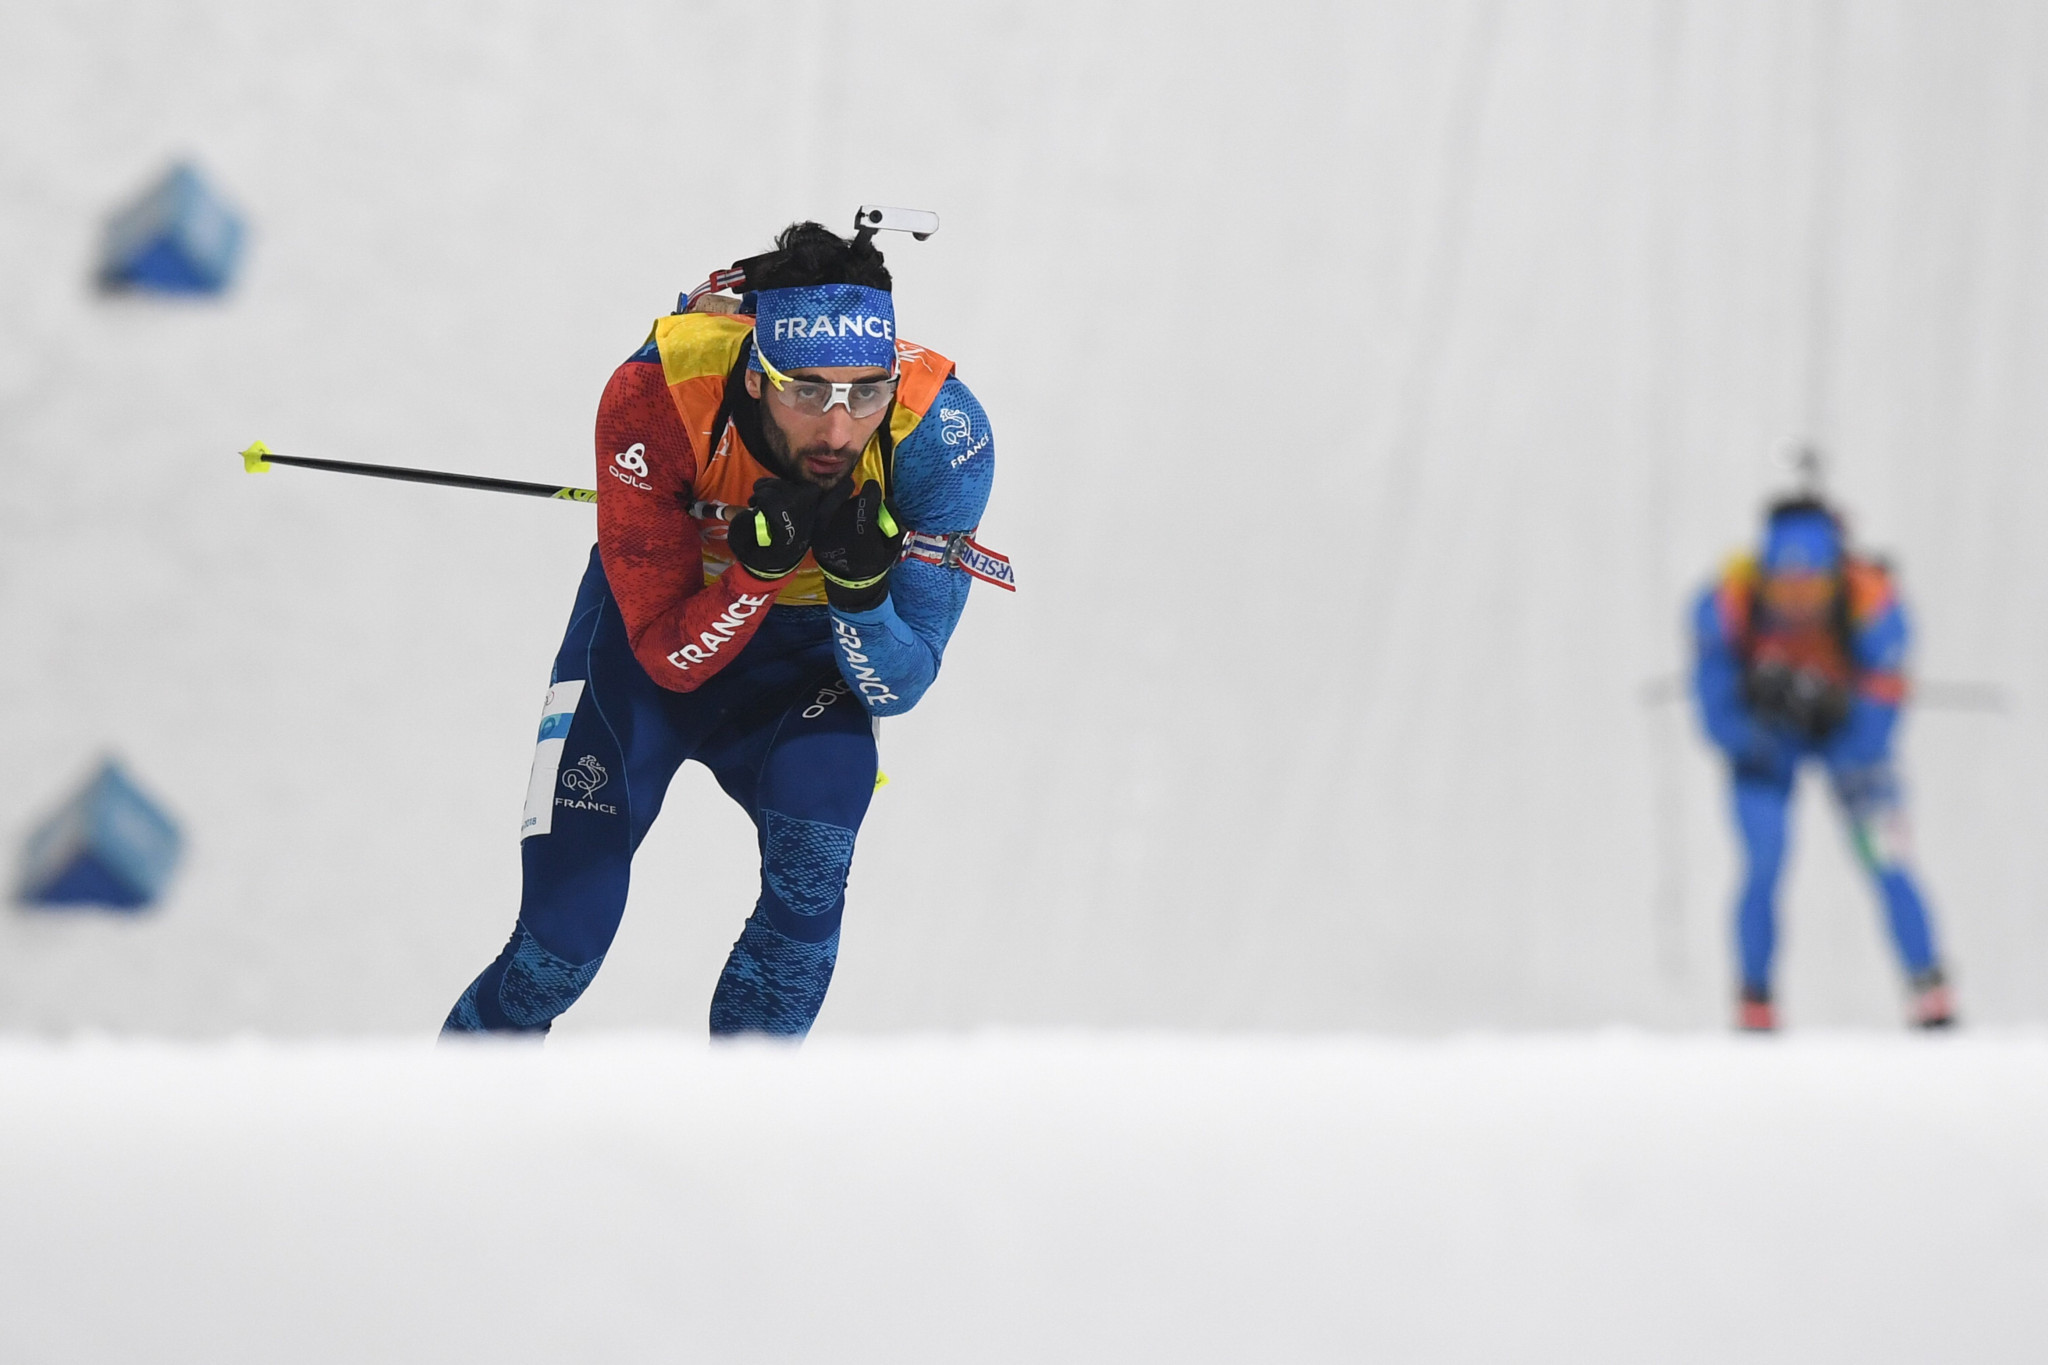 Biathlon legend Fourcade named President of Paris 2024 Athletes' Commission